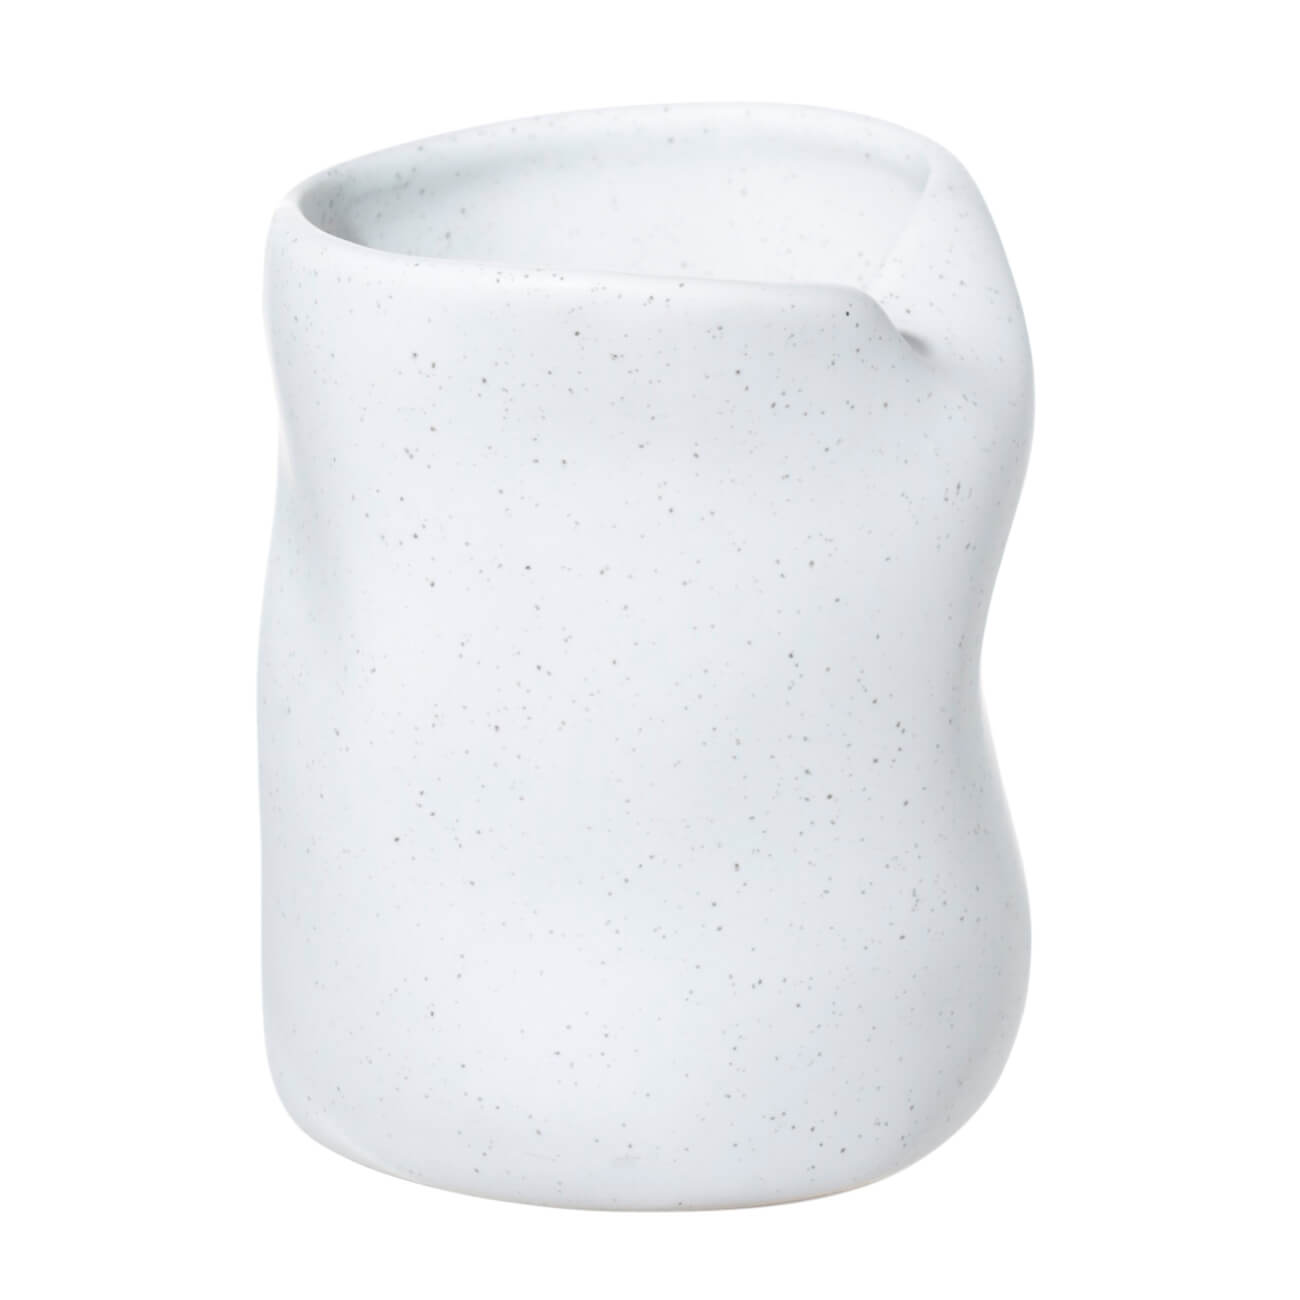 Стакан для ванной комнаты, 10 см, керамика, белый, в крапинку, Delicia настенный стакан veragio stanford двойной бронза керамика vr std 7742 br